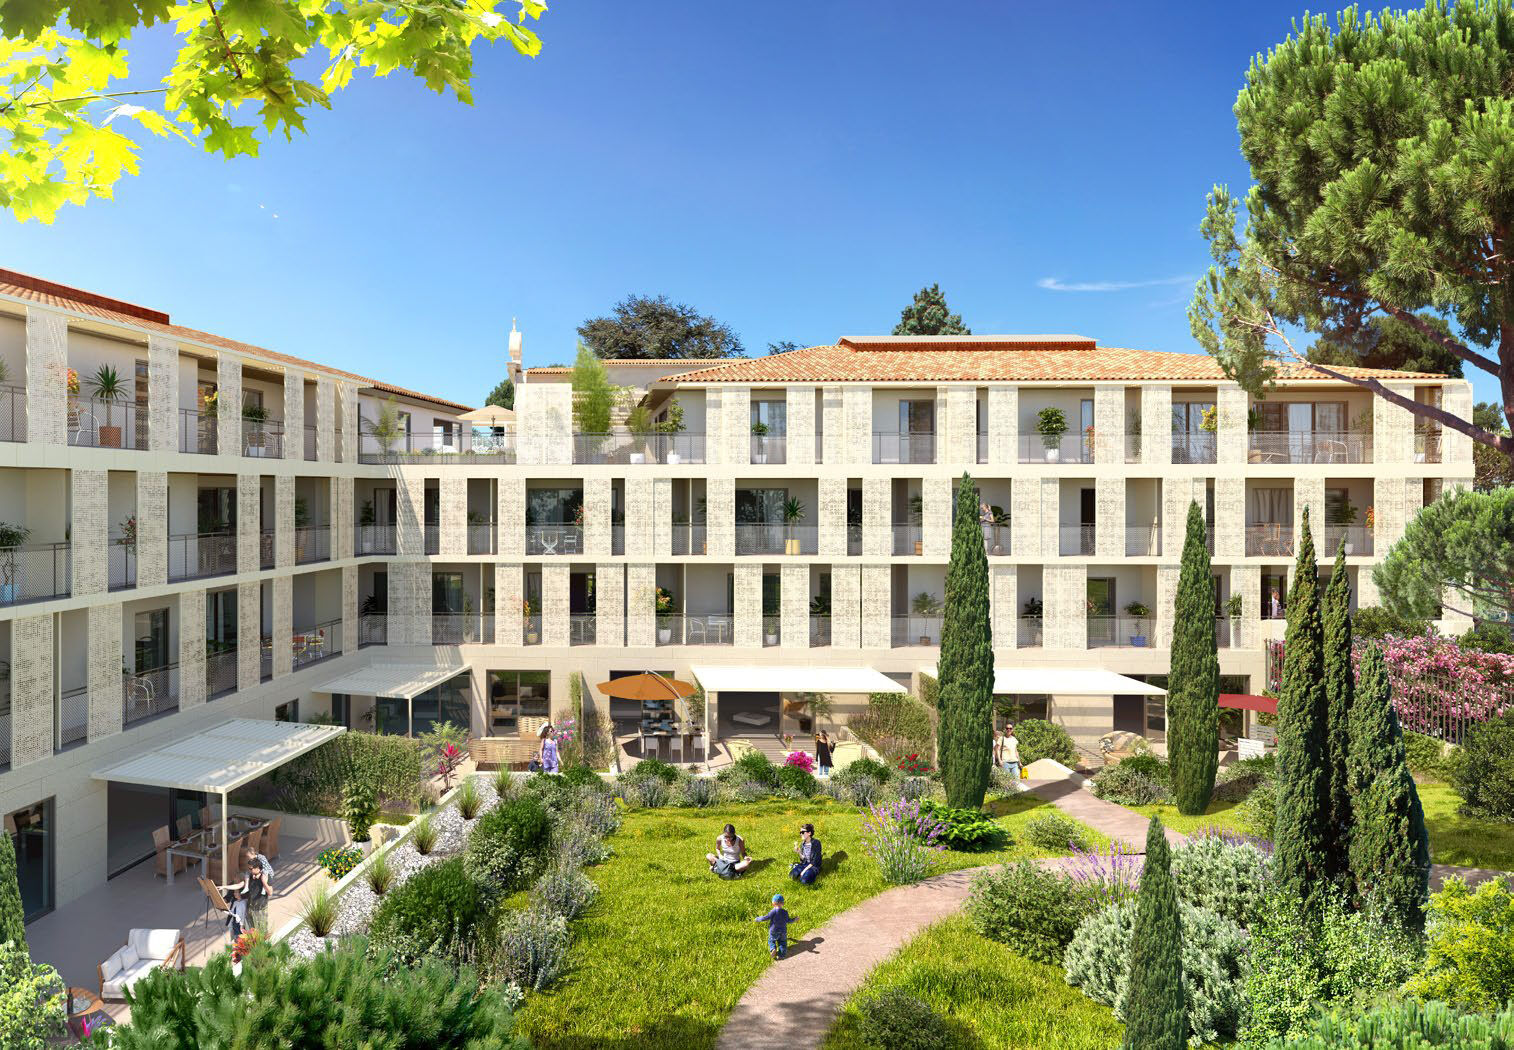 Photo Vente Appartement neuf 95 m² à Montpellier 440 000 ¤ image 1/1